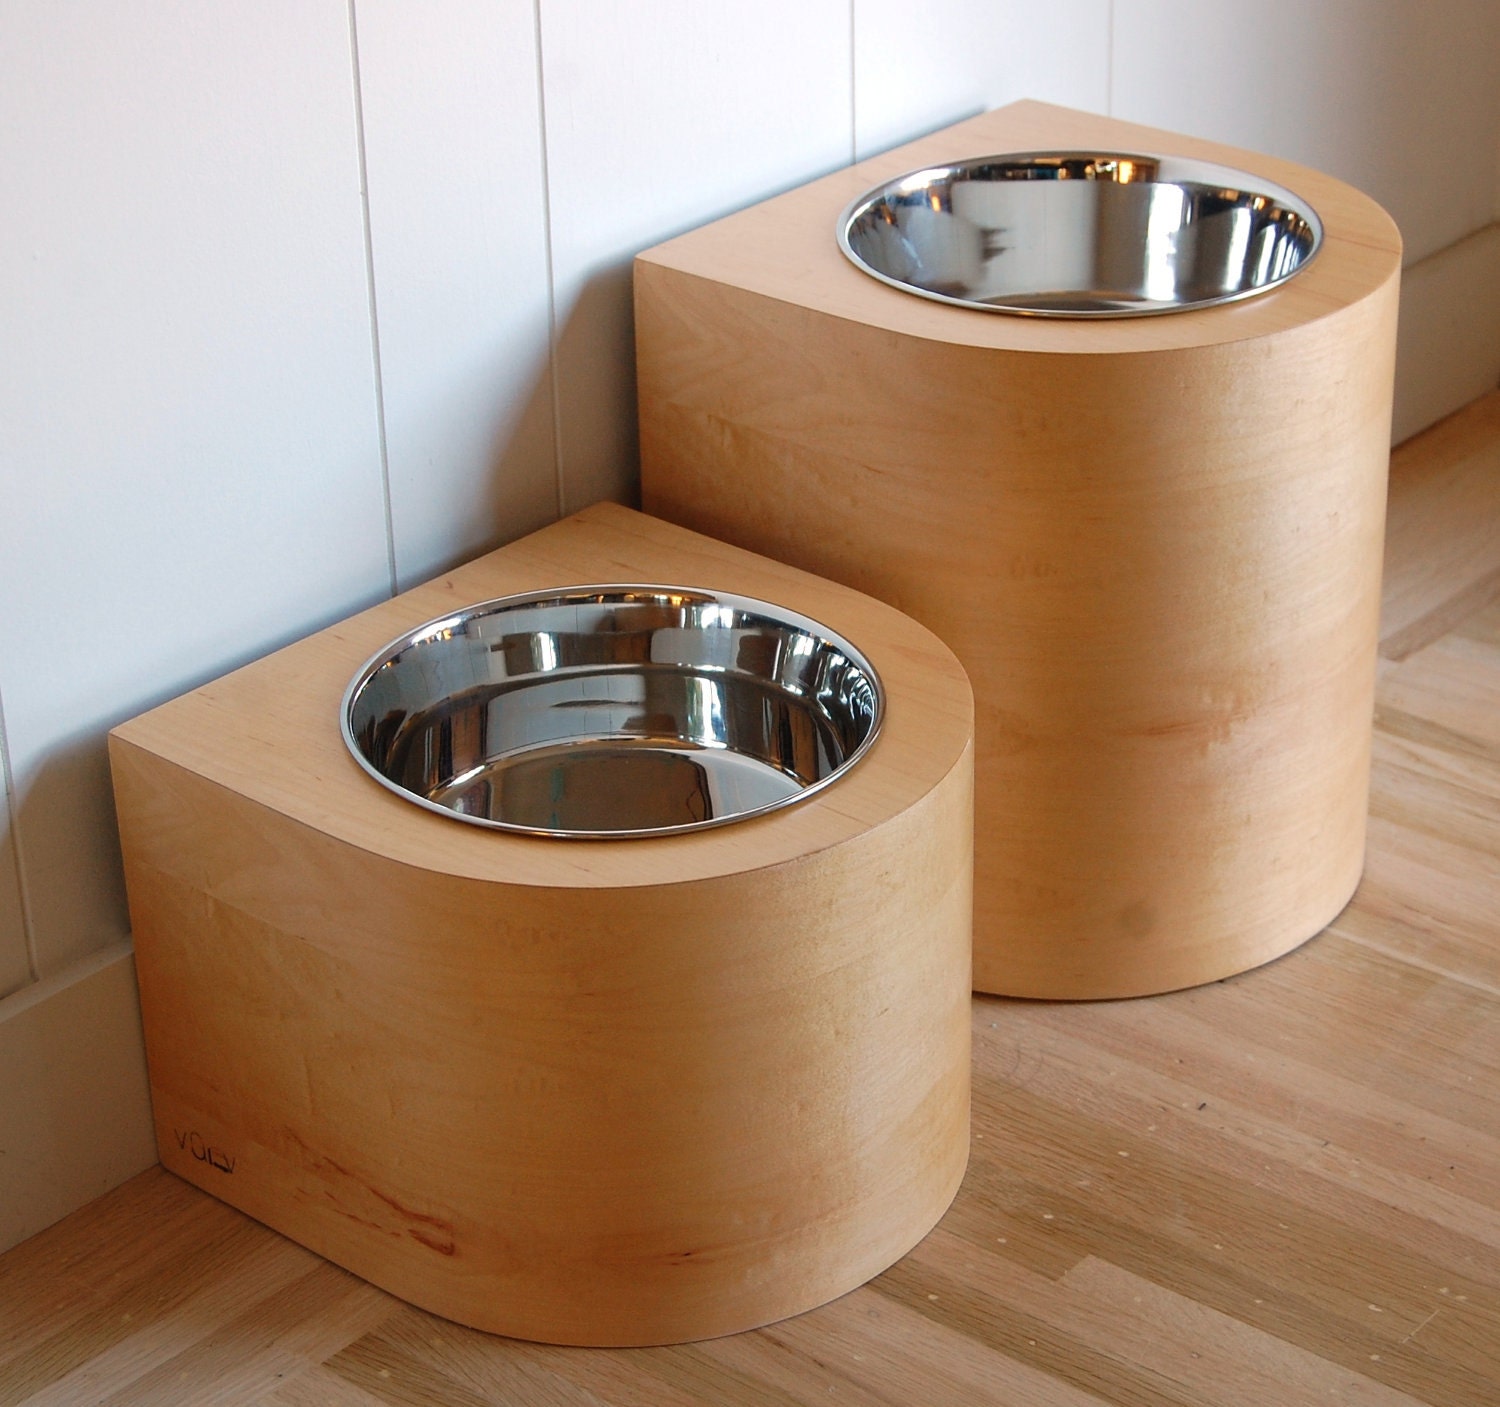 2 quart raised feeder set for large dogs - SALE